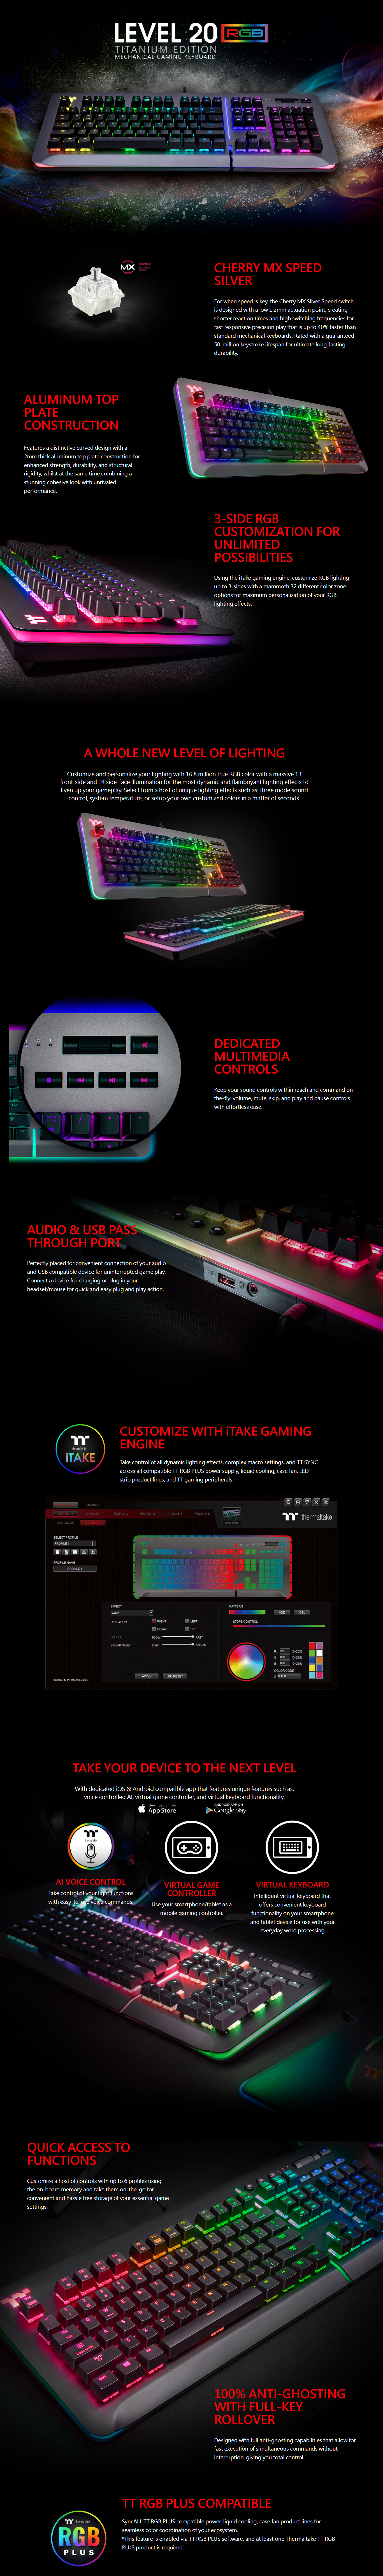 Keyboards-Thermaltake-Level-20-RGB-Titanium-Wired-Gaming-Keyboard-Cherry-MX-Speed-Silver-1